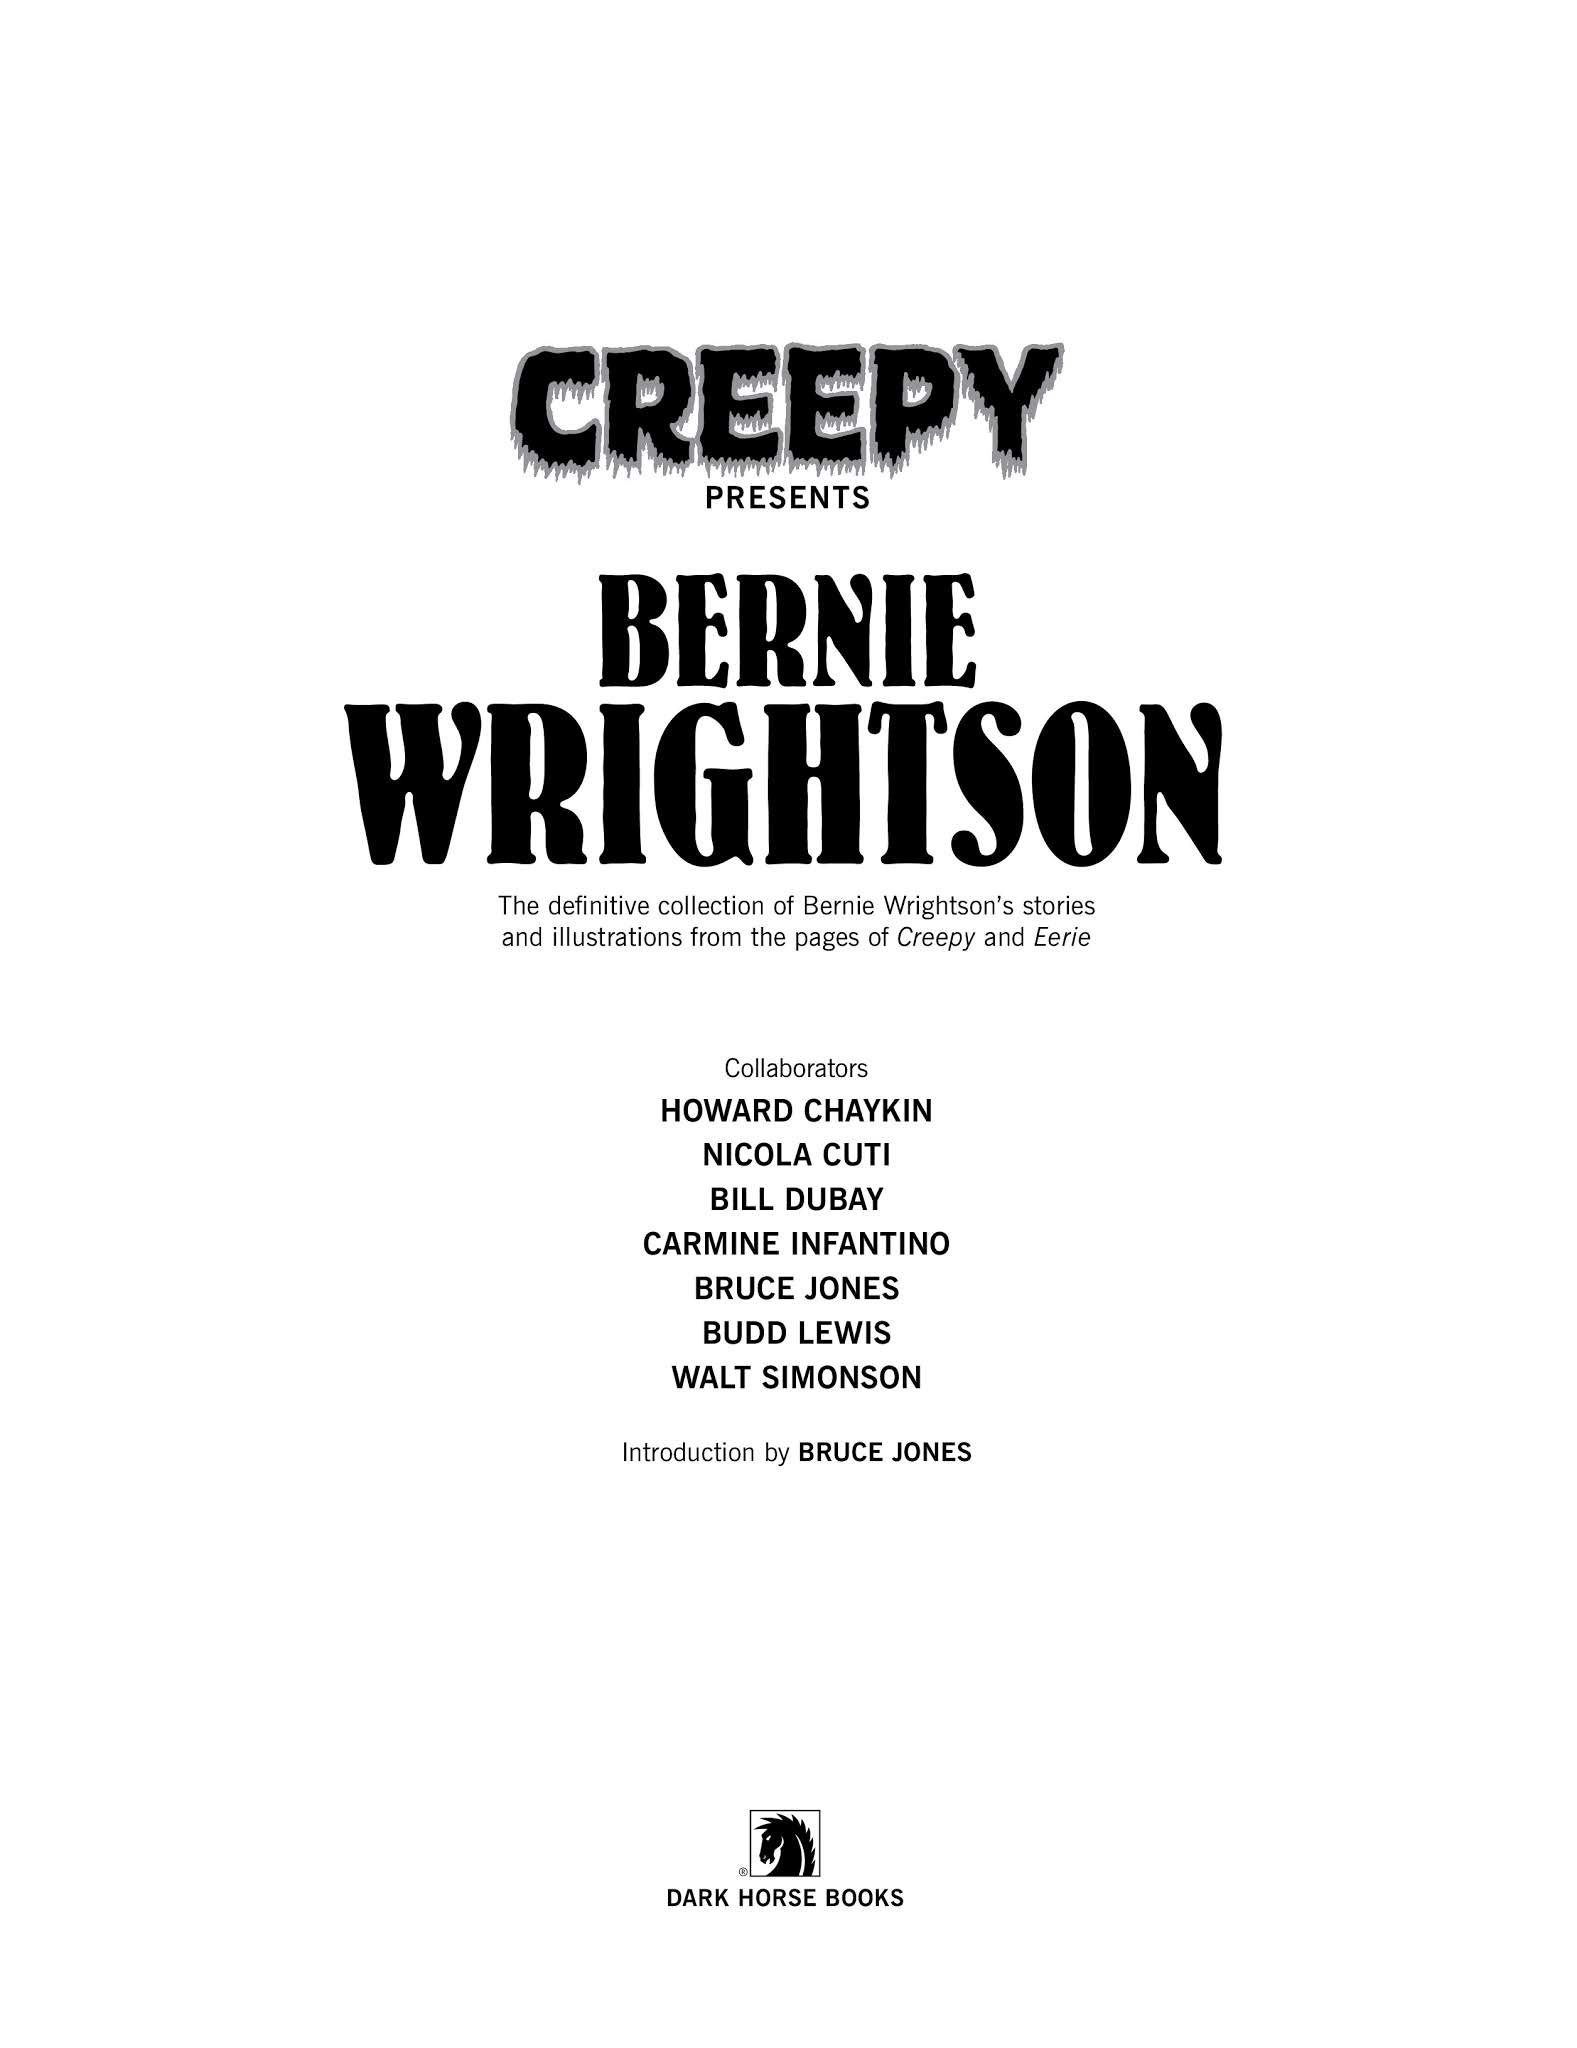 Read online Creepy Presents Bernie Wrightson comic -  Issue # TPB - 6